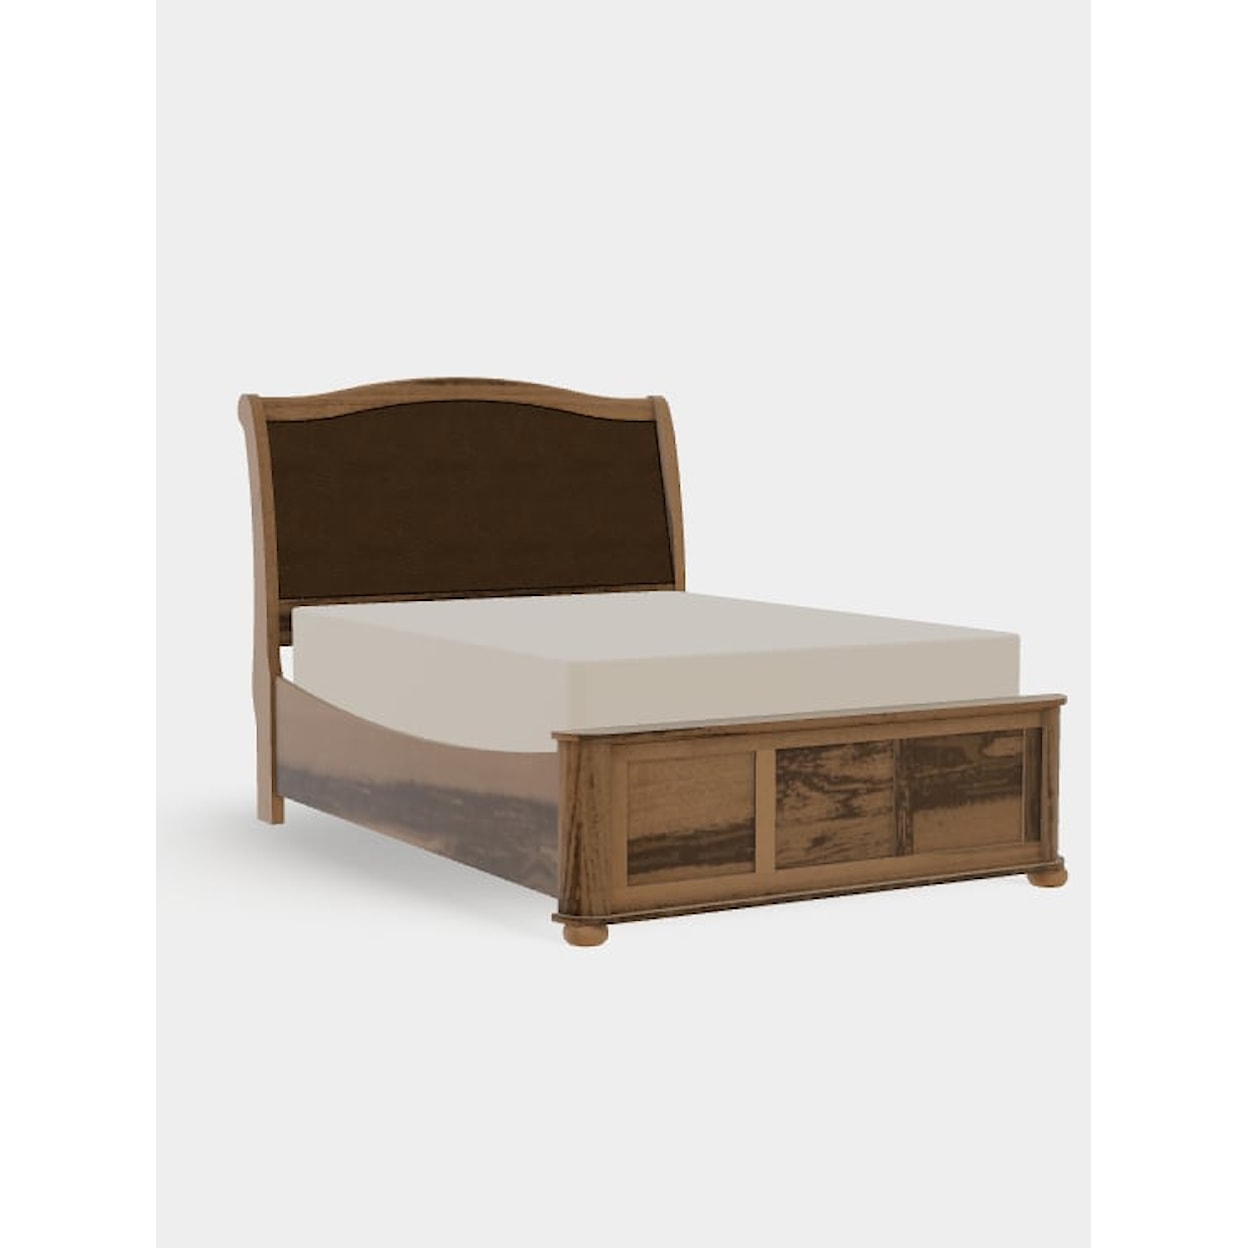 MAVIN Kingsport Queen Upholstered Bed